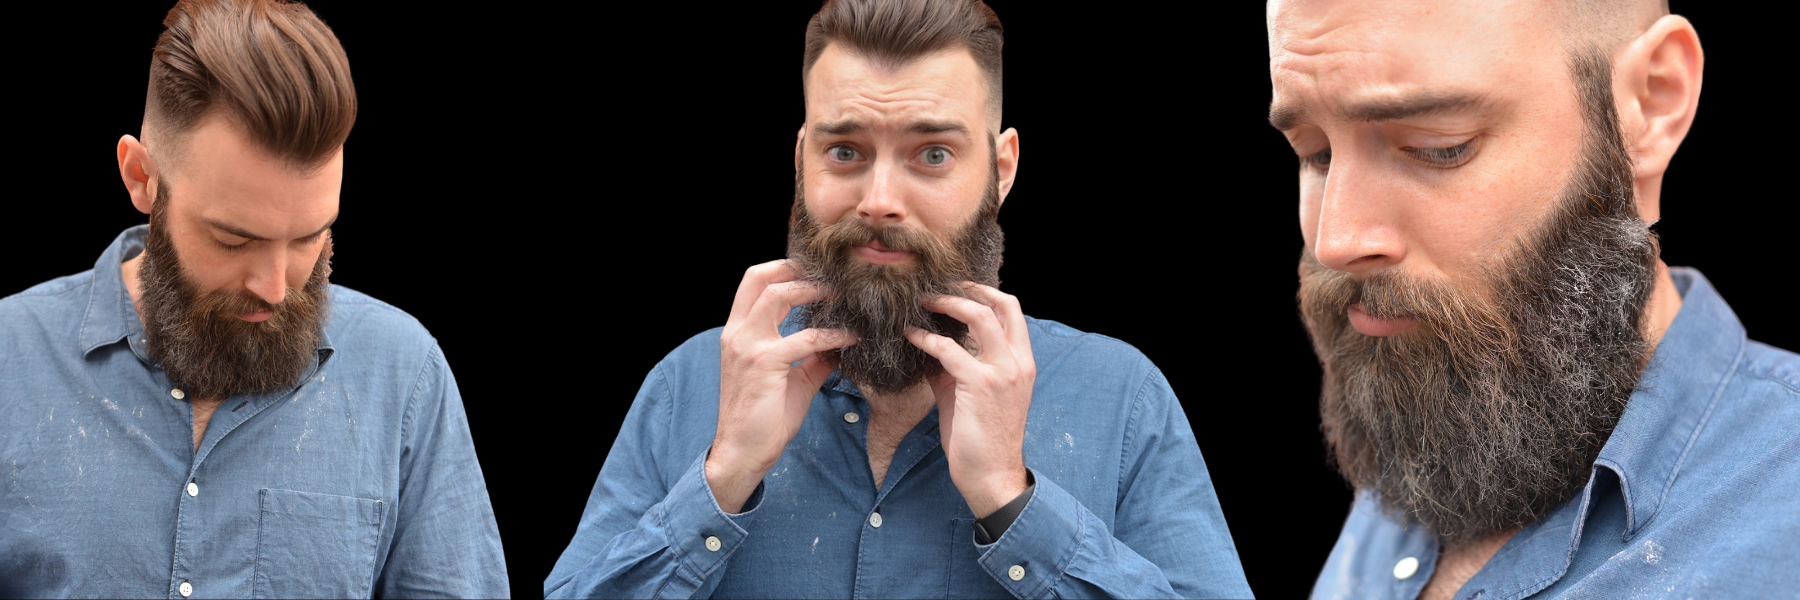 Flakey Beard - How to Stop Winter Beard Dandruff